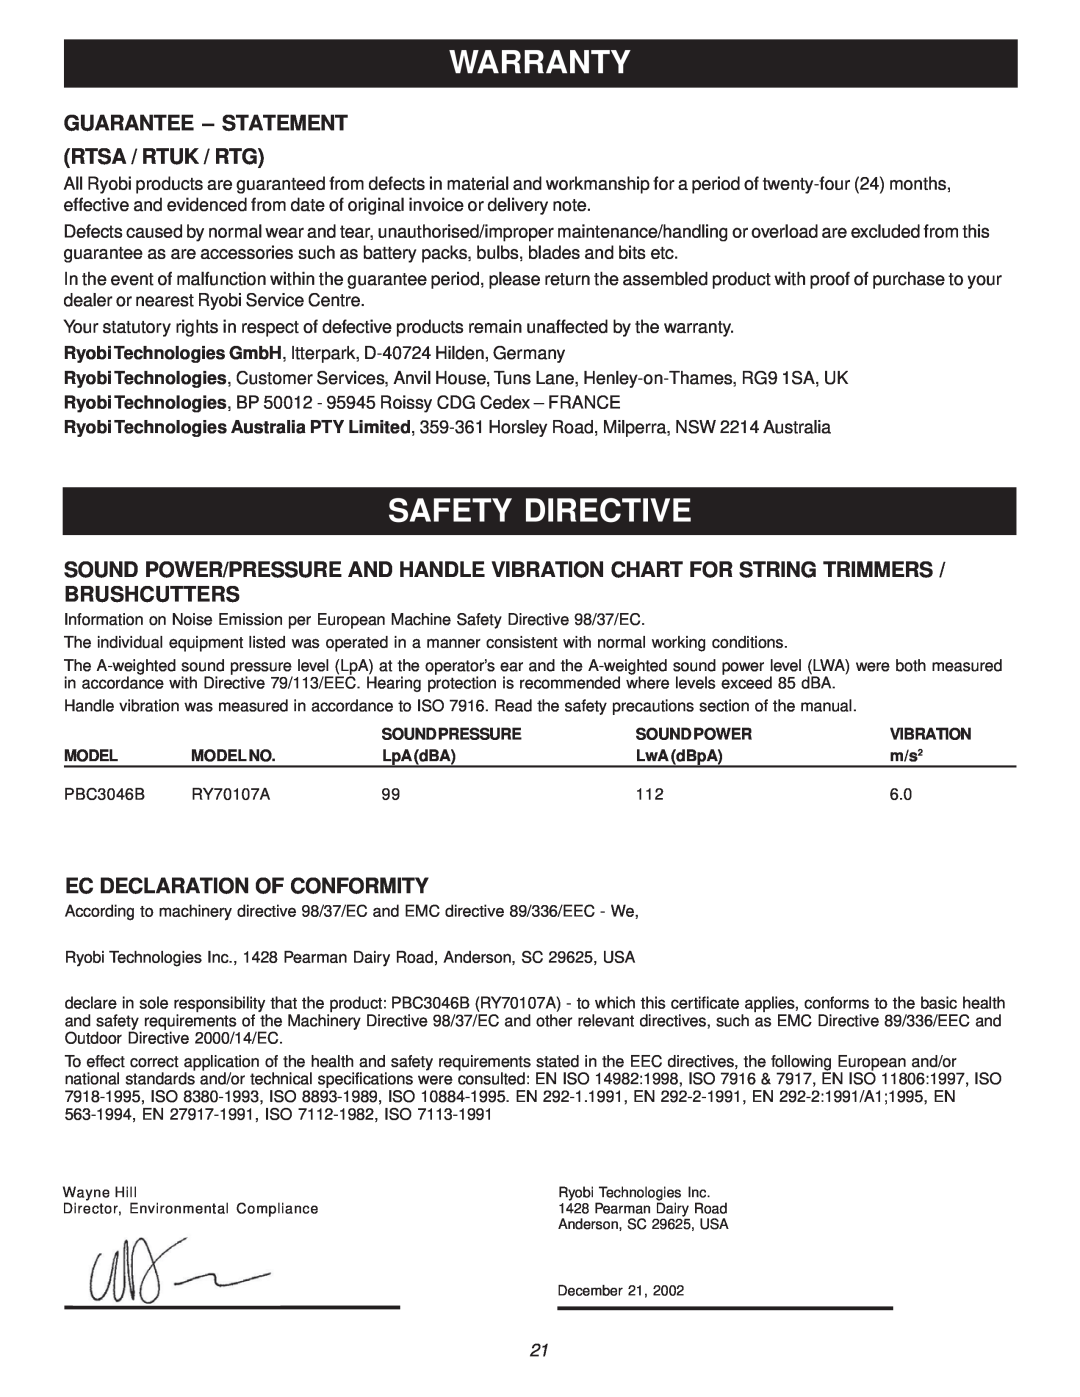 Ryobi Outdoor PBC3046B Warranty, Safety Directive, Guarantee - Statement Rtsa / Rtuk / Rtg, Ec Declaration Of Conformity 